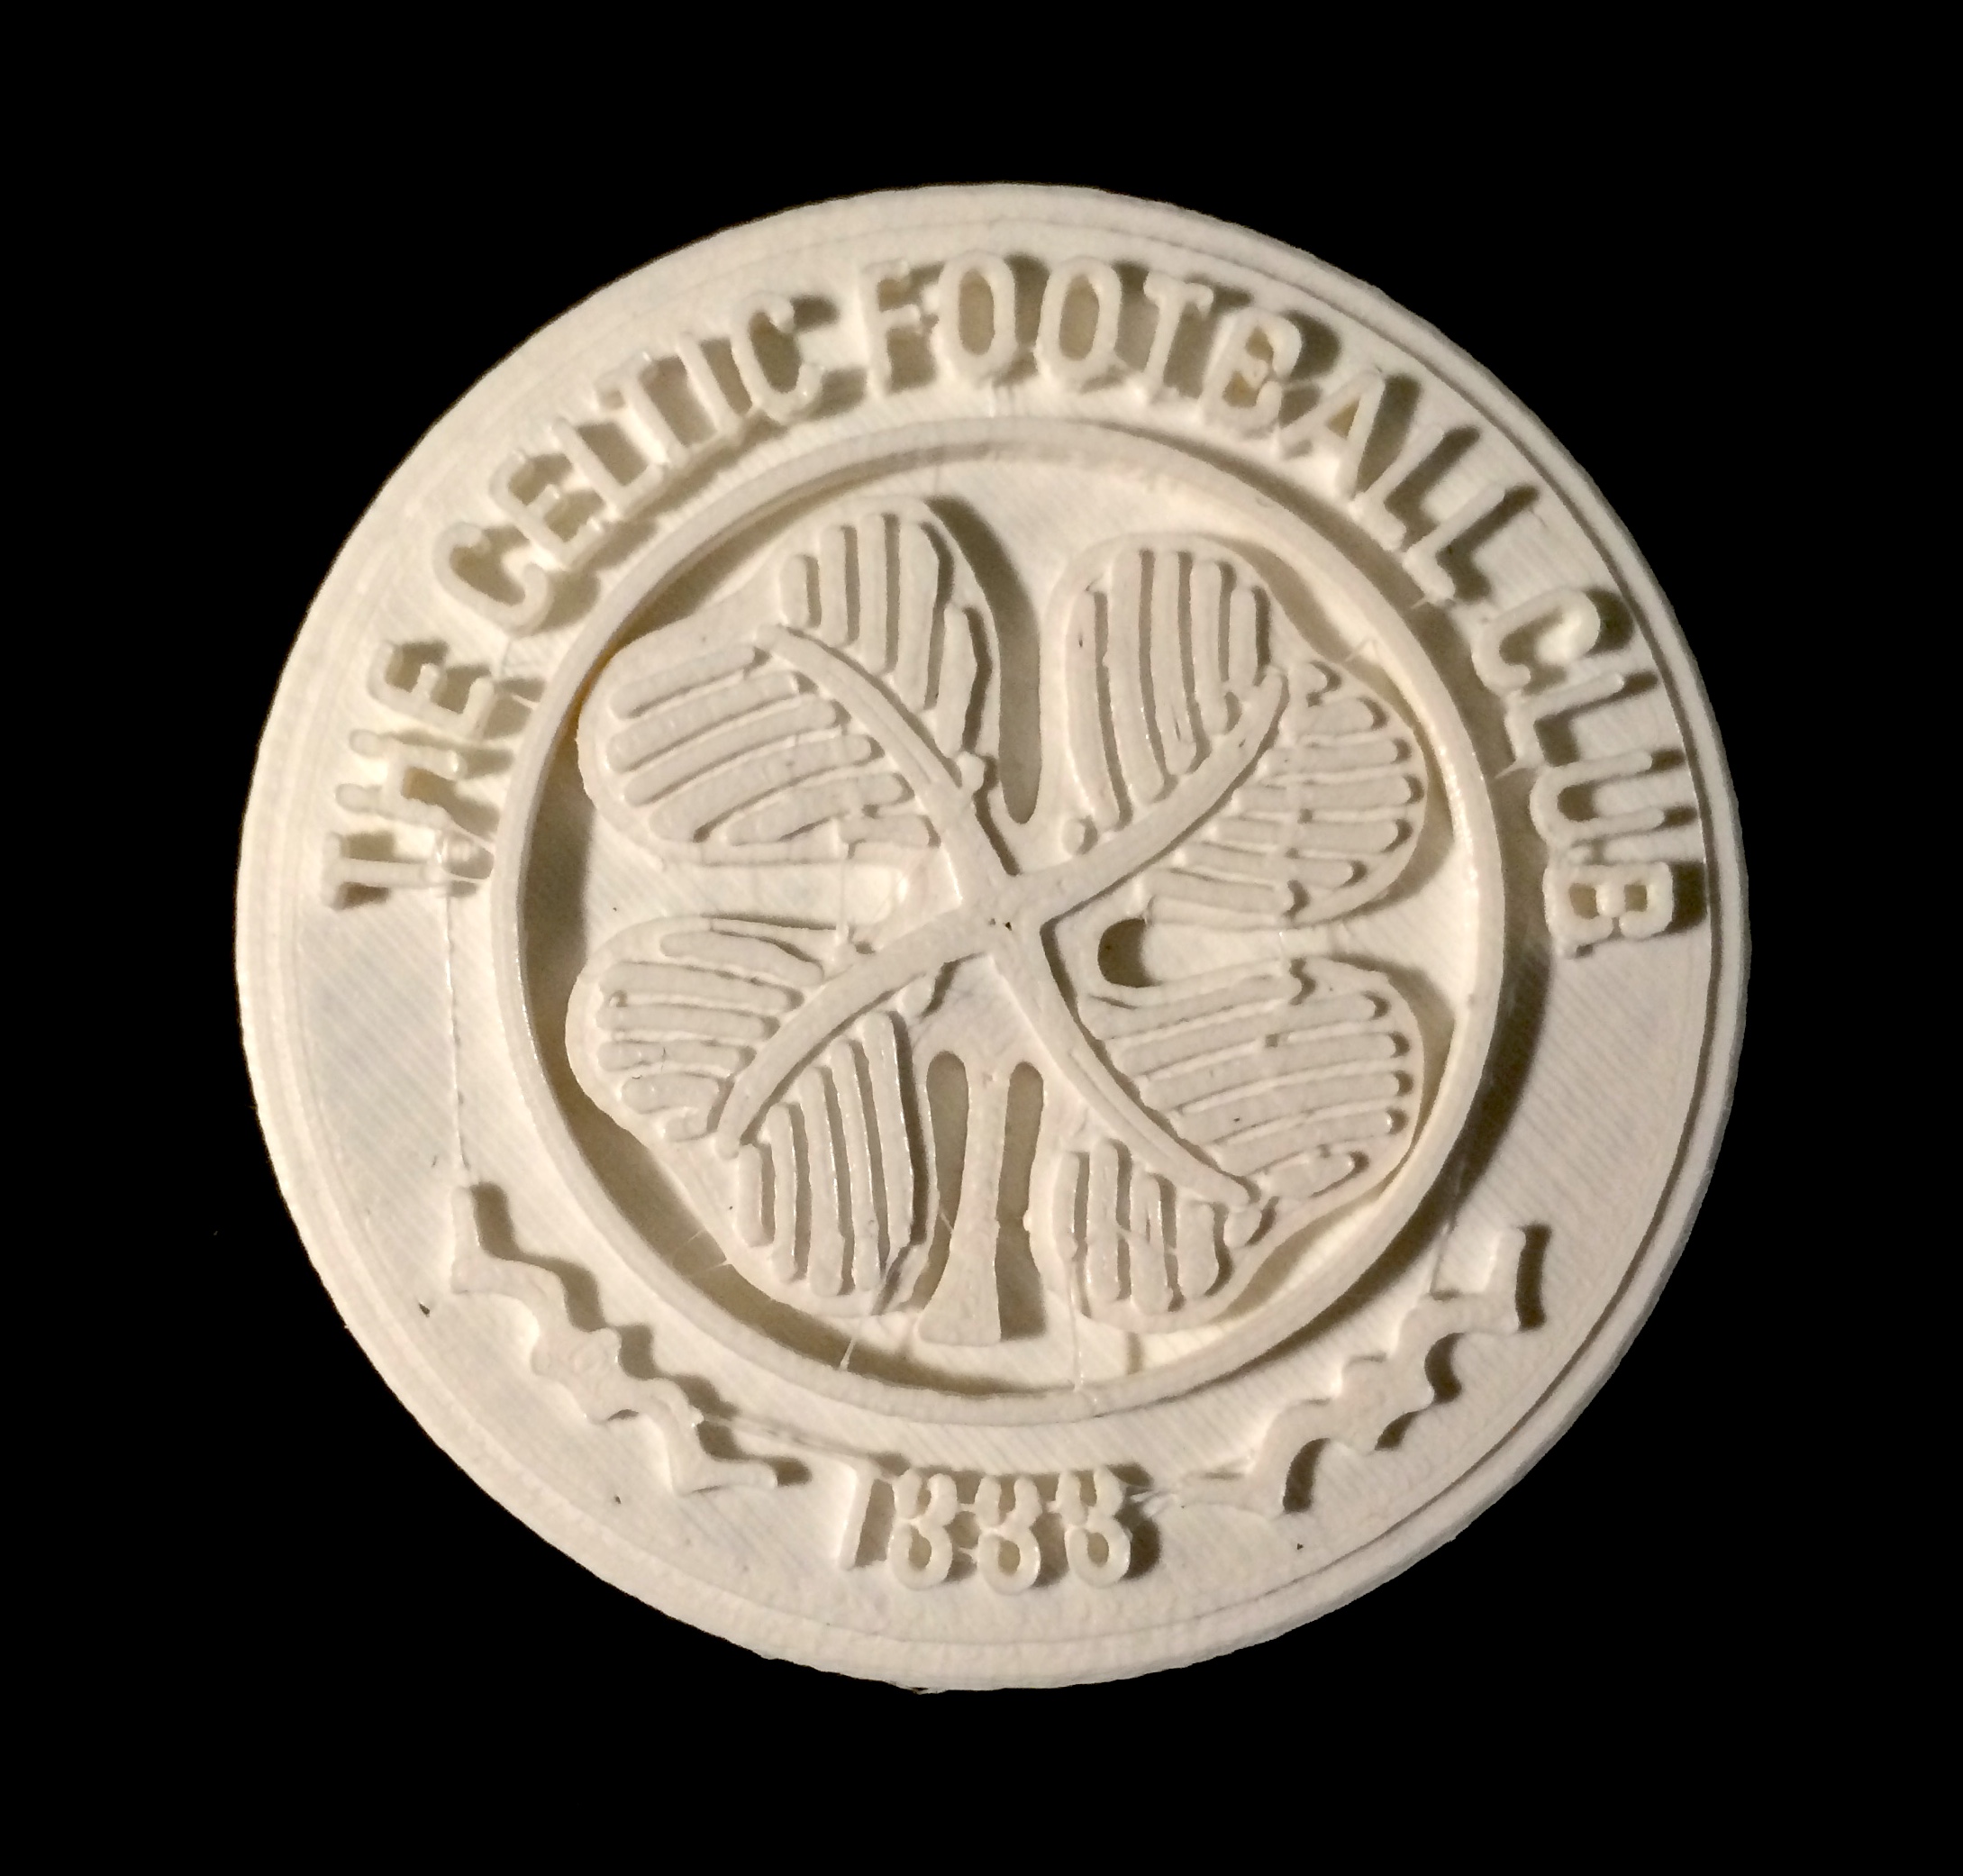 Celtic Glasgow FC - Logo